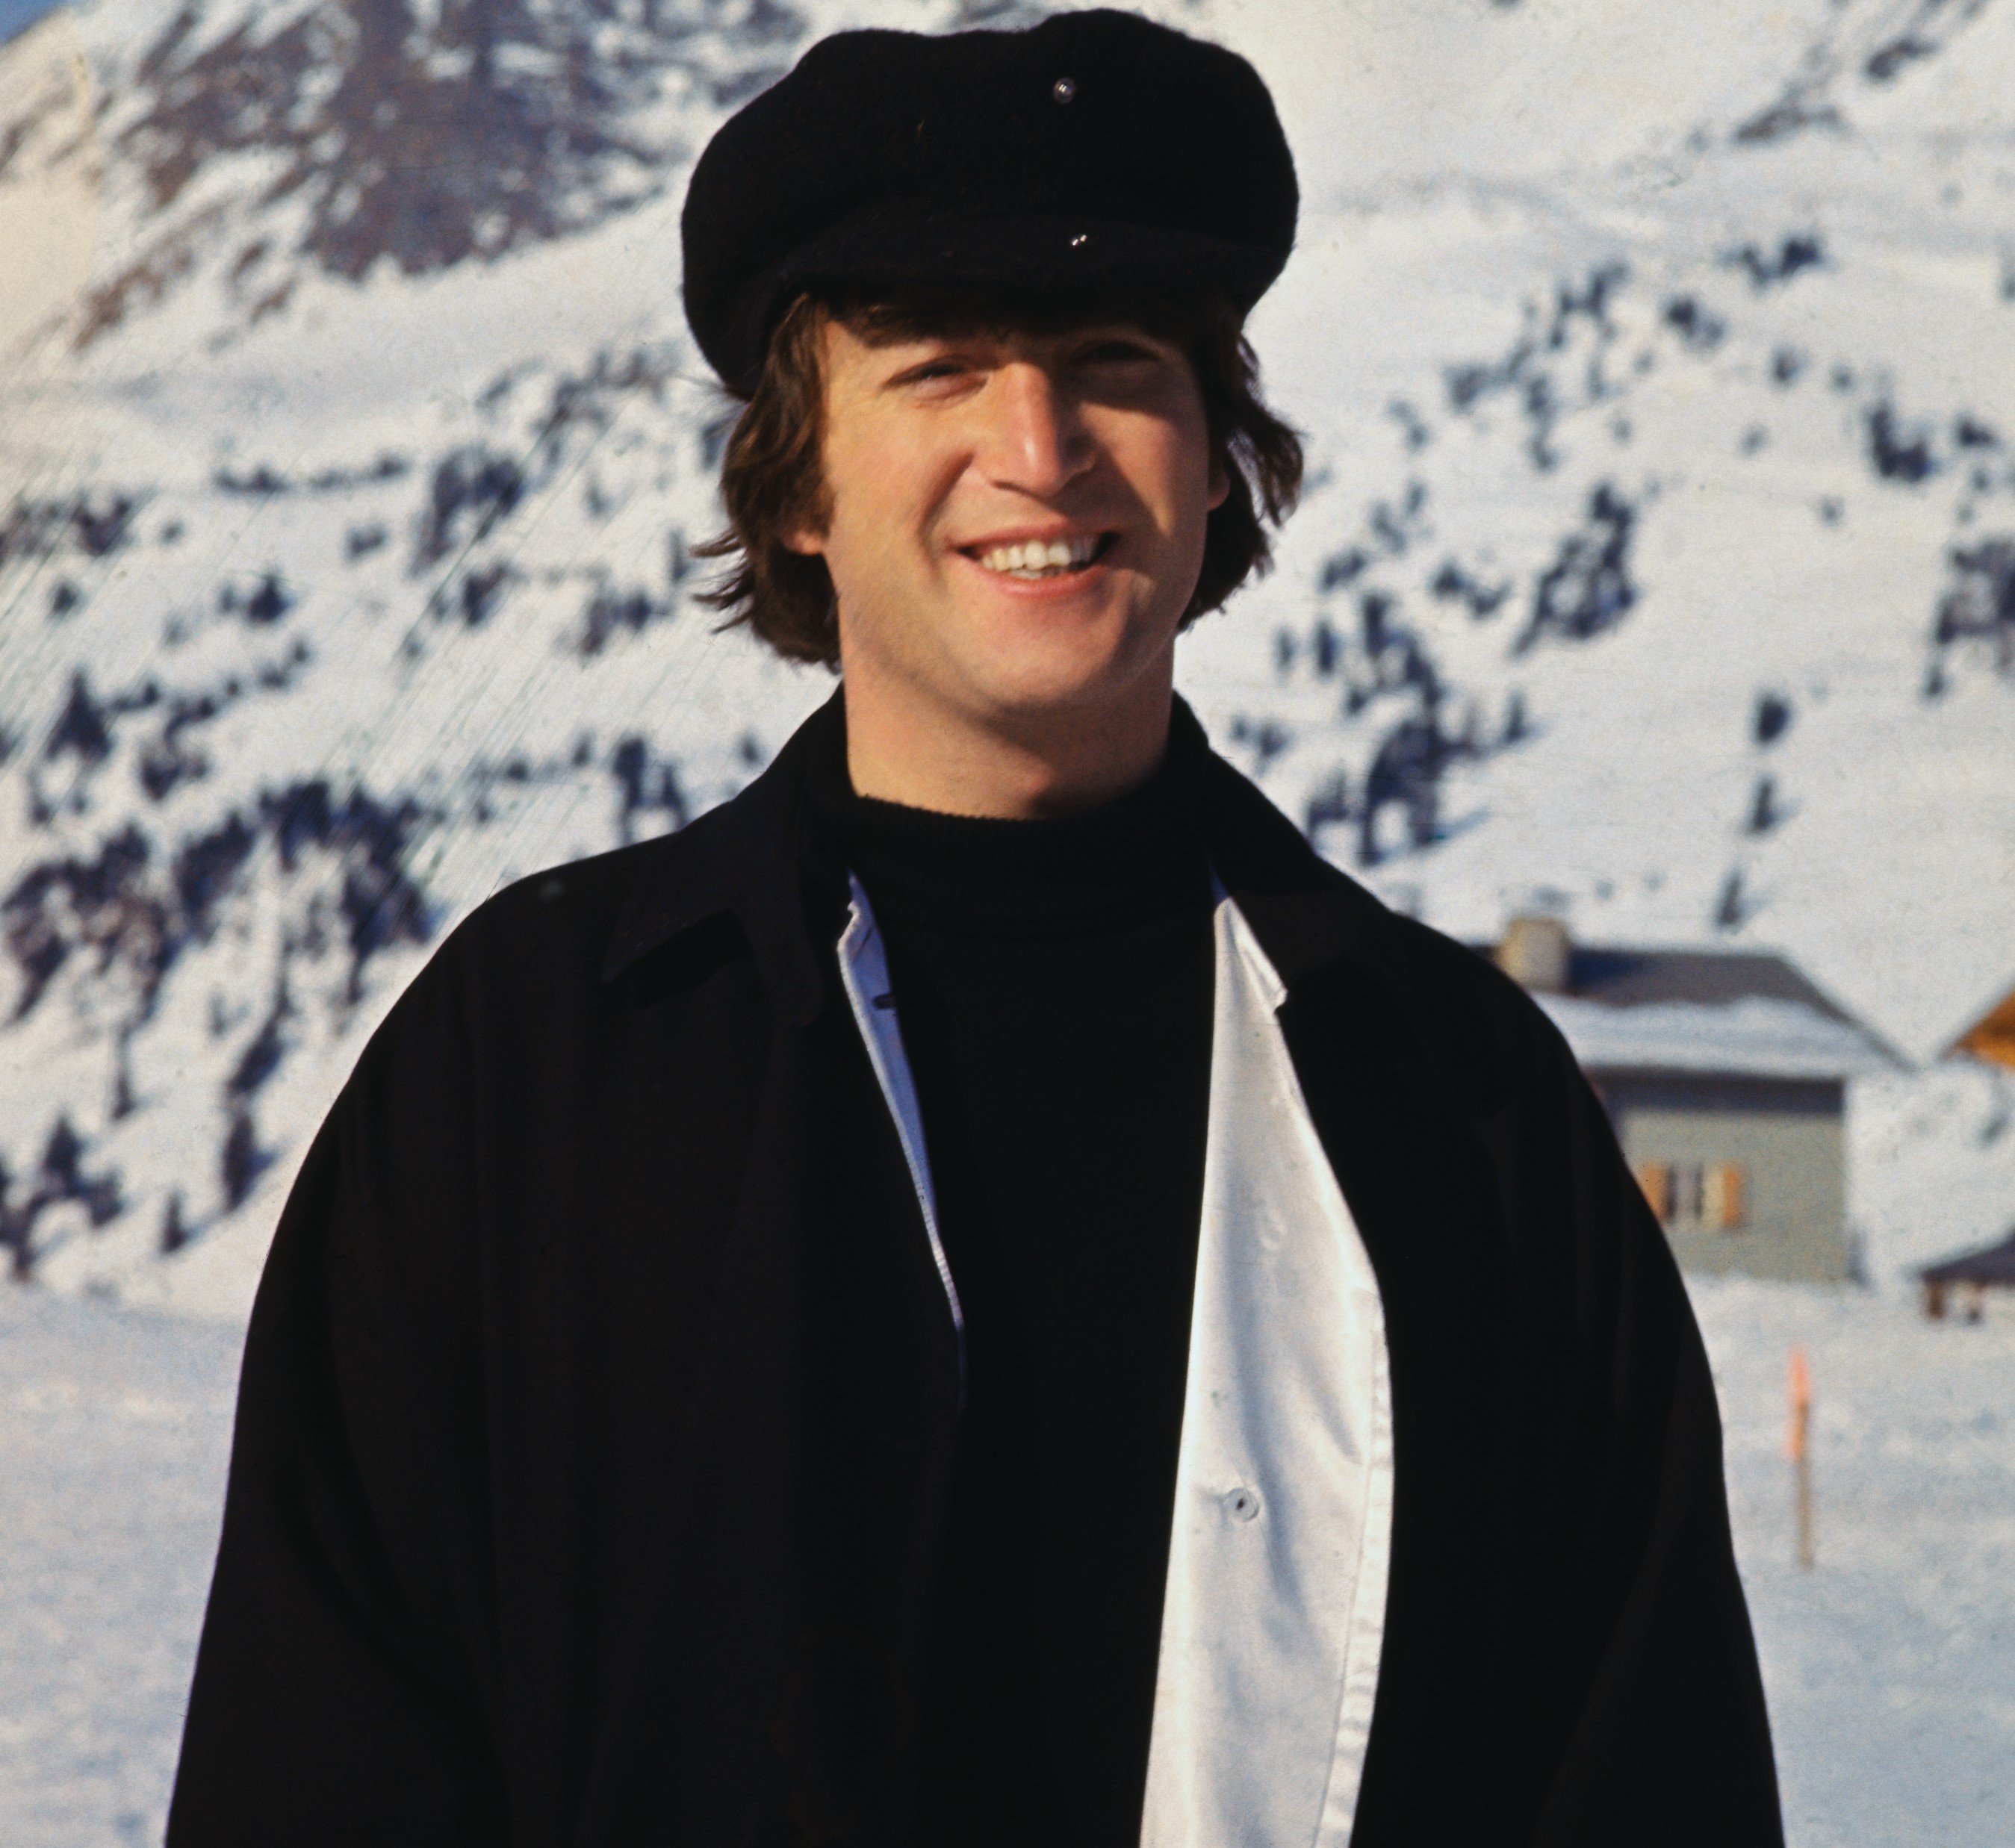 John Lennon posing for The Beatles' 'Help!' in a snowy area